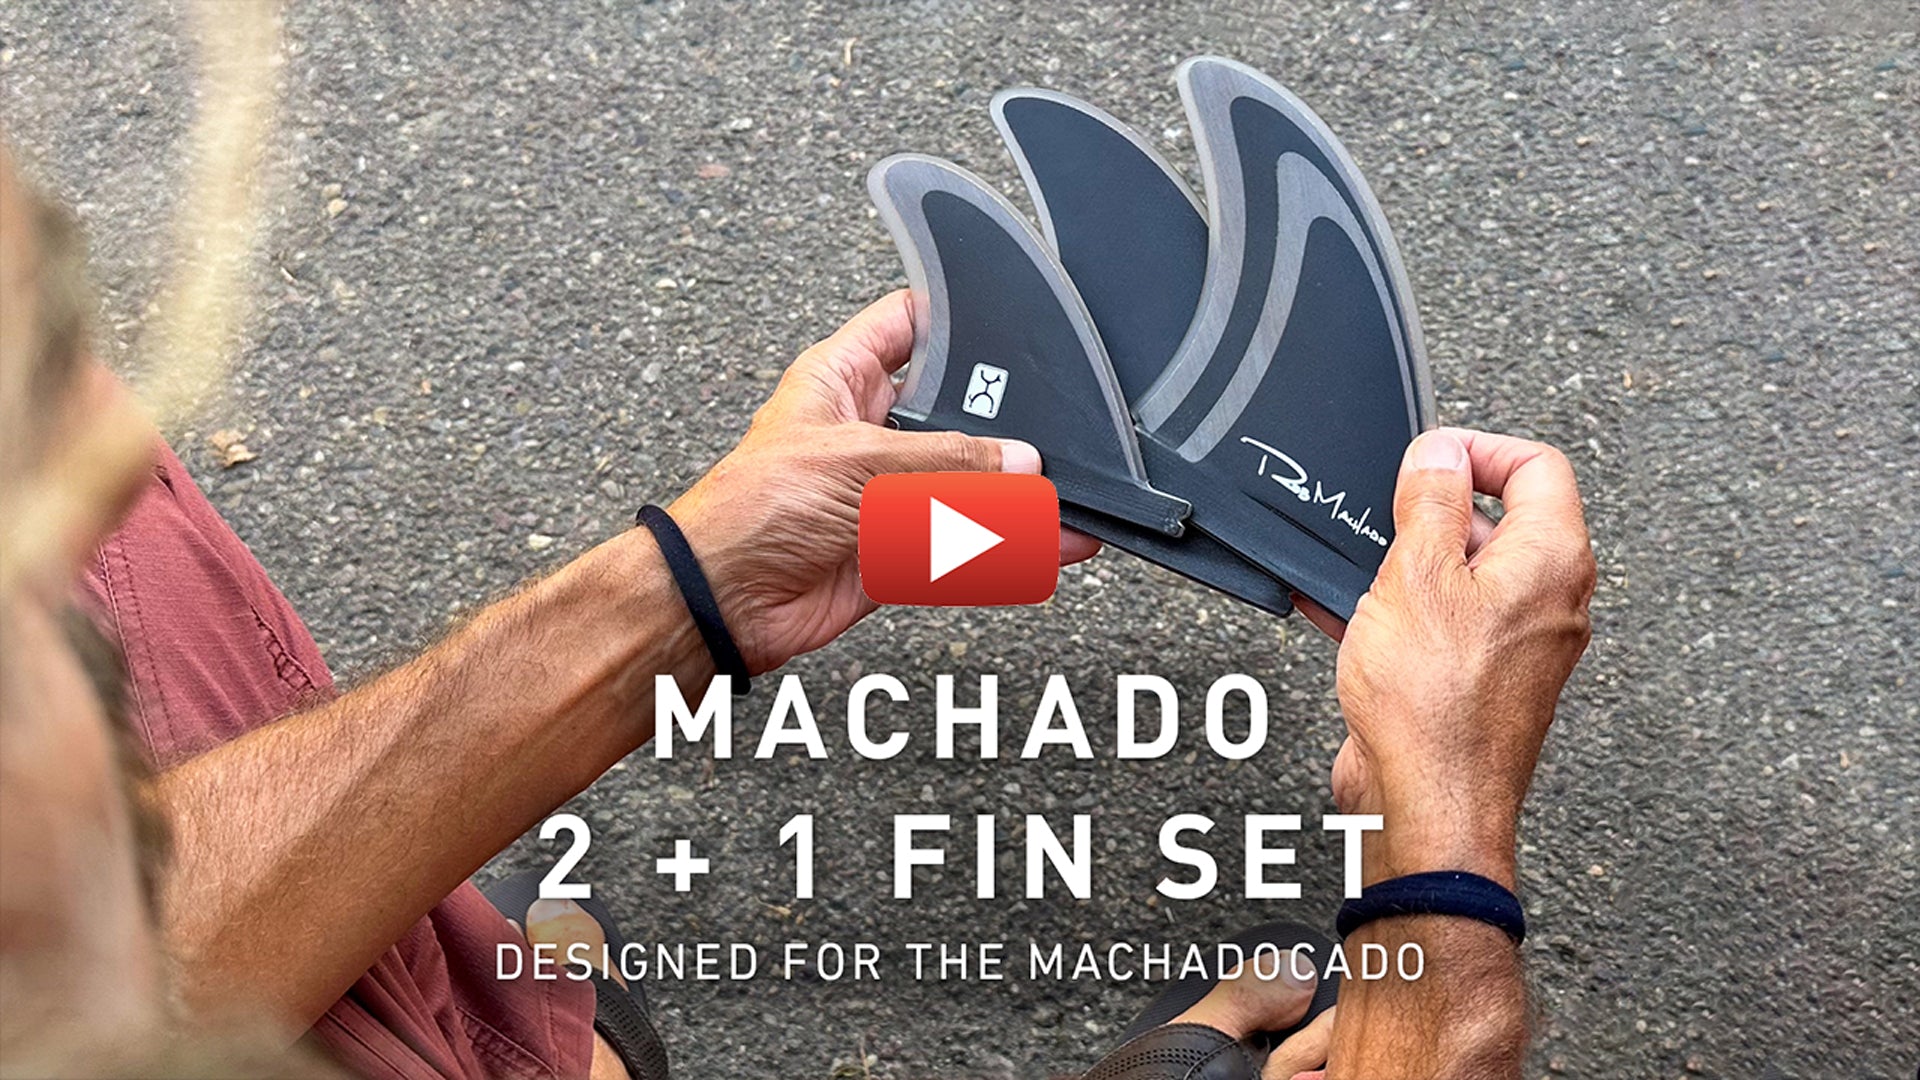 Introducing the Machado 2 + 1 Fin Set